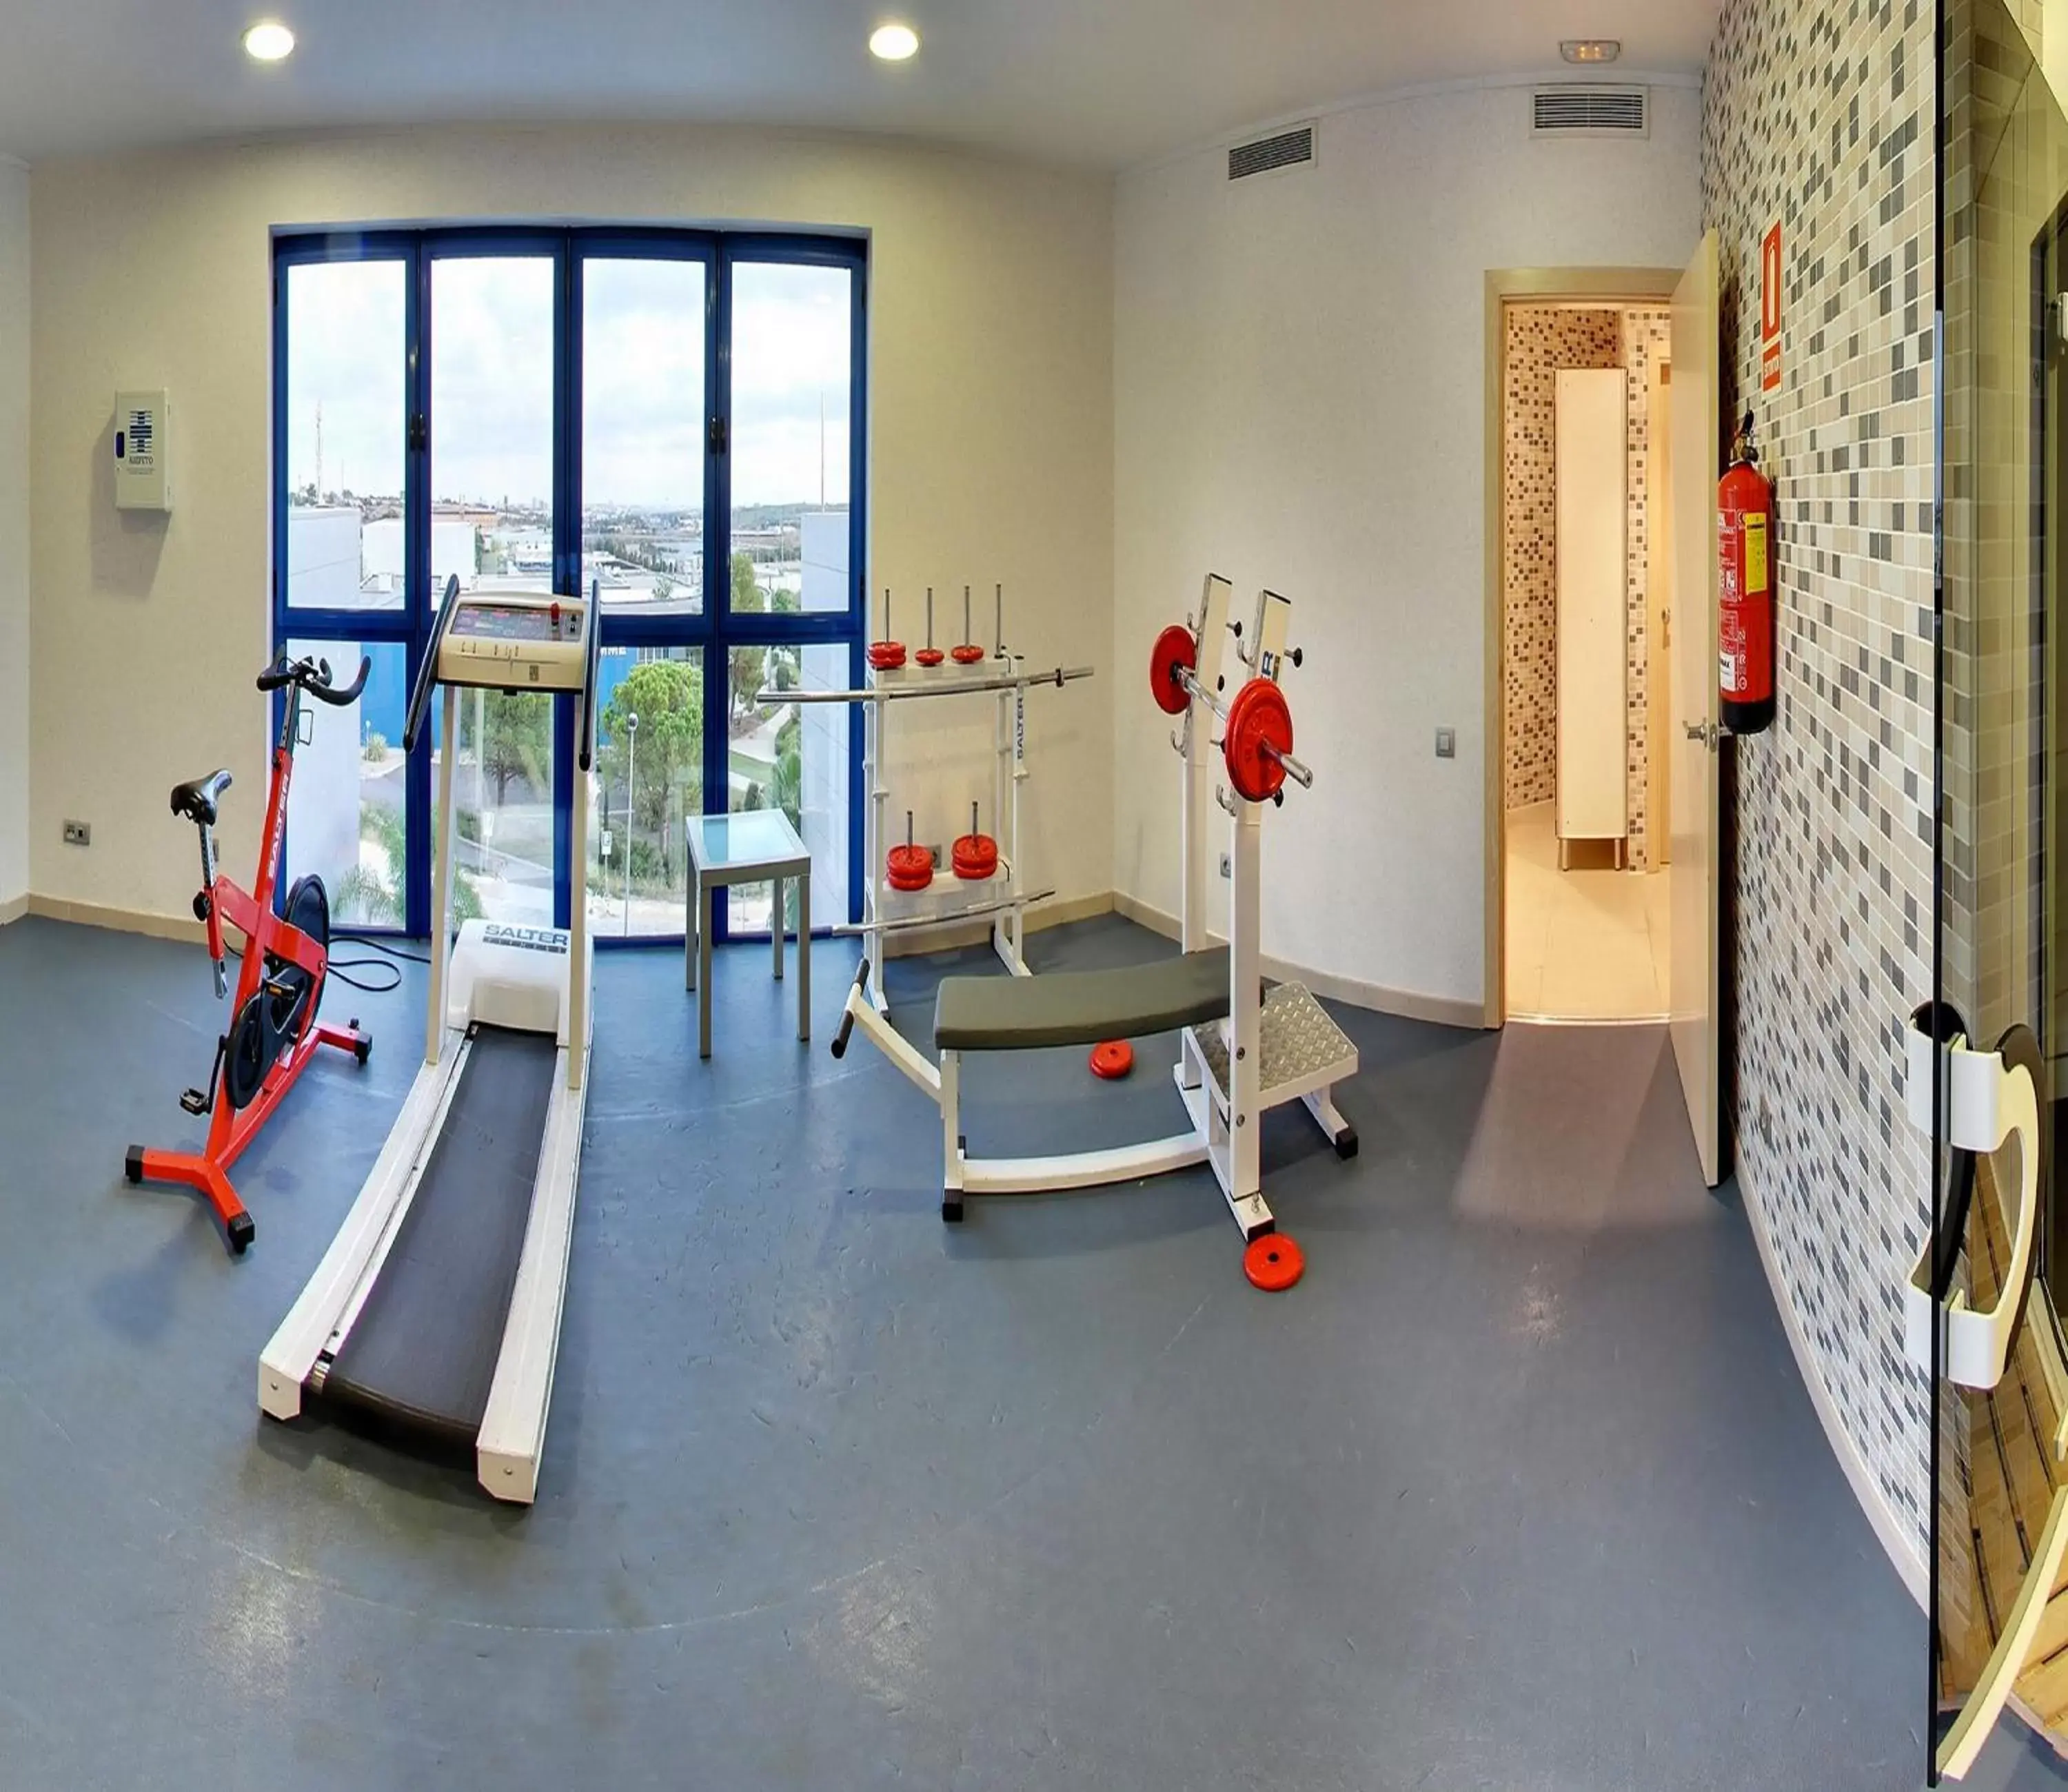 Fitness centre/facilities, Fitness Center/Facilities in Hotel Mas Camarena